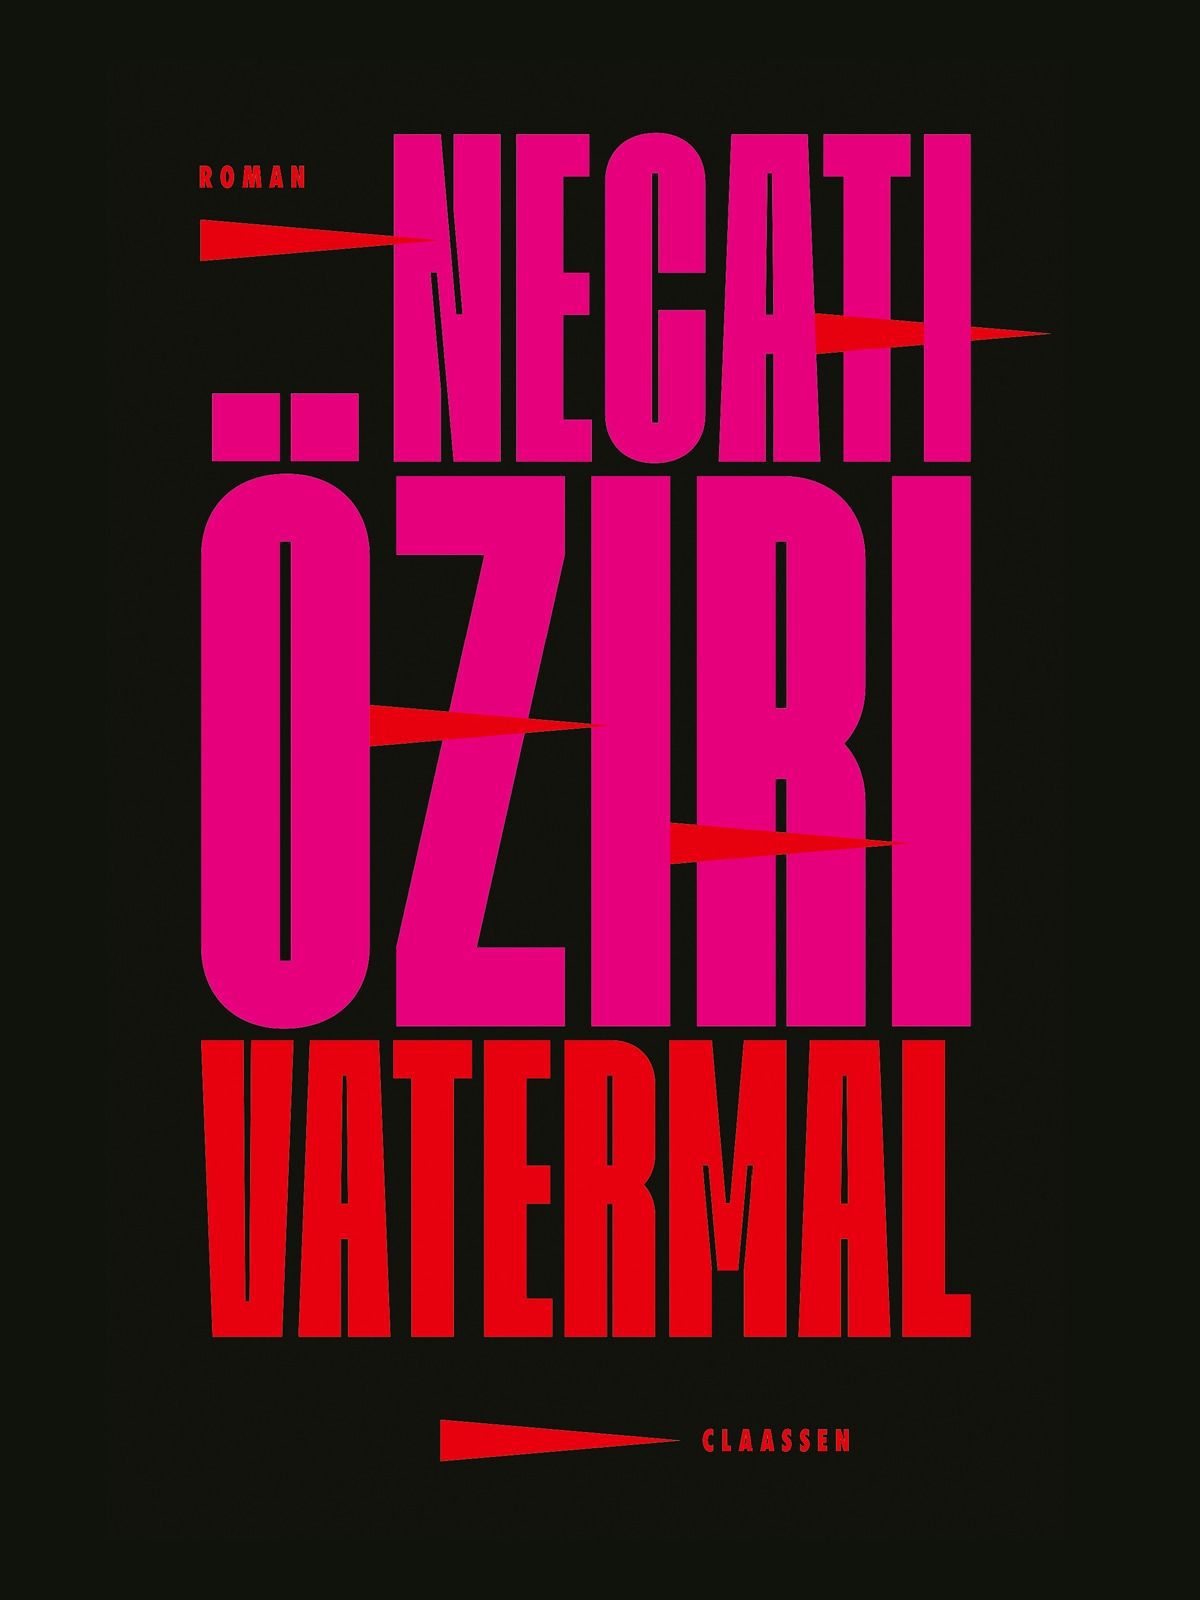 Buchcover von Necati Öziris Roman ,,Vatermal''